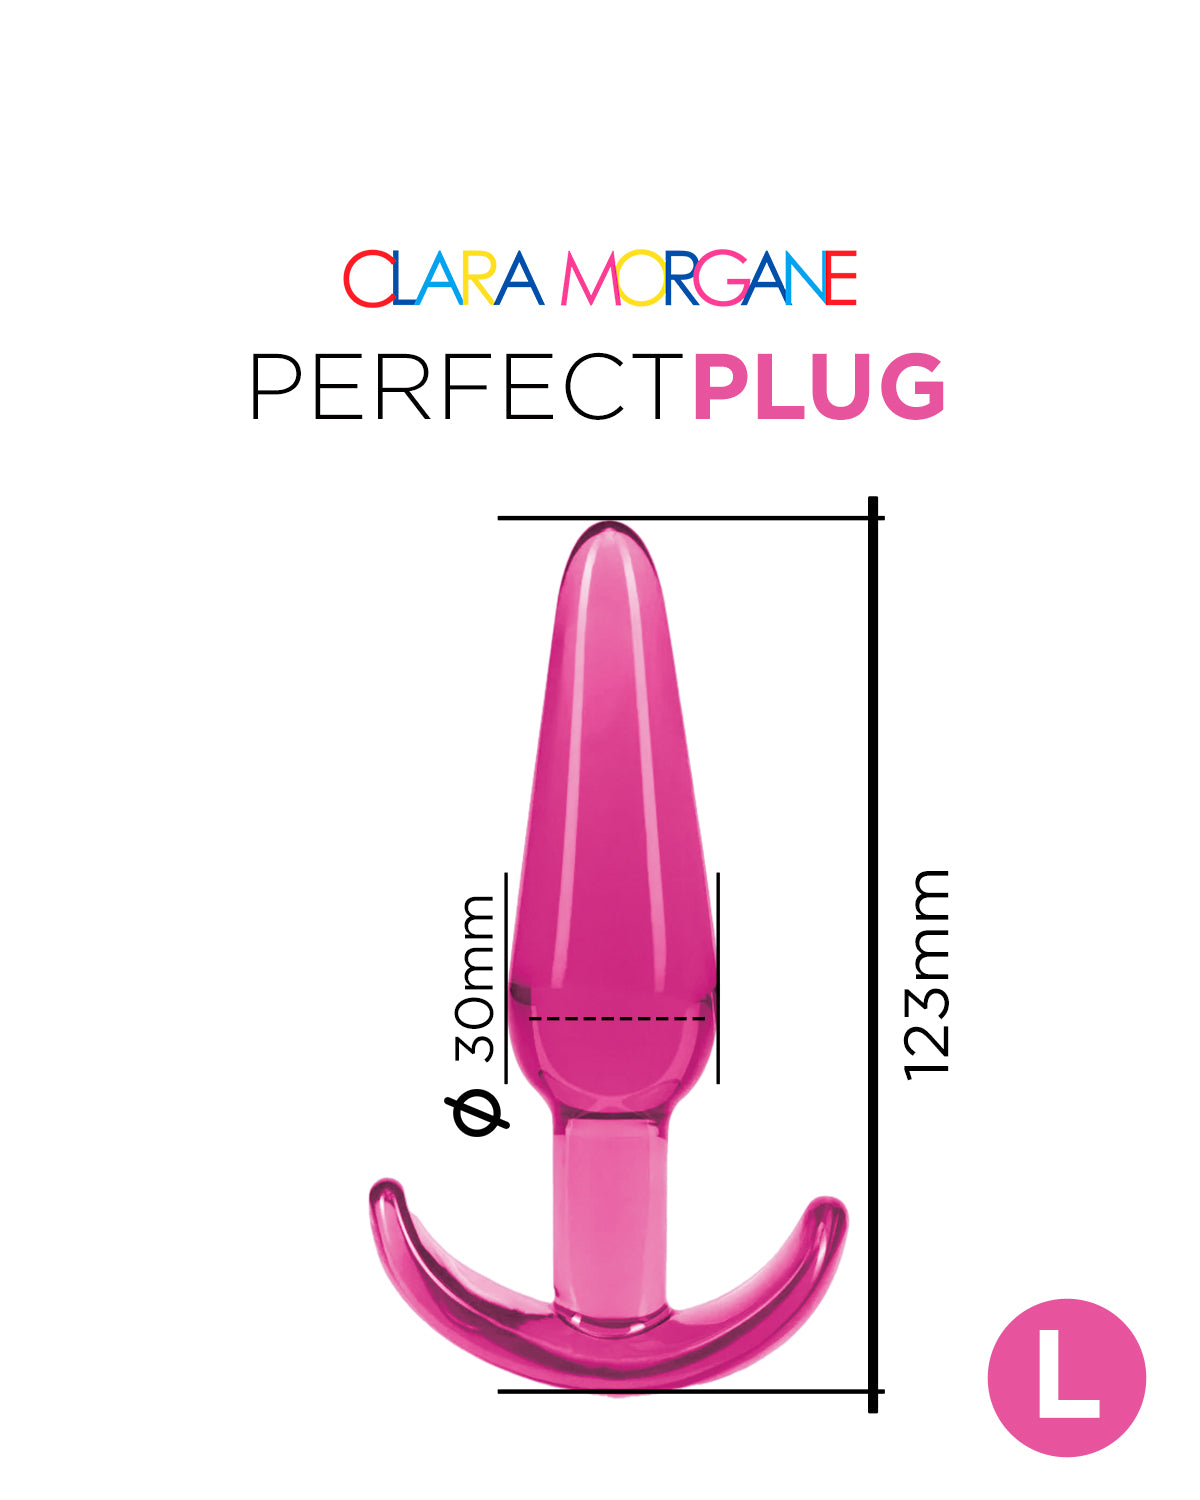 Plug Perfect Plug L - Clara Morgane